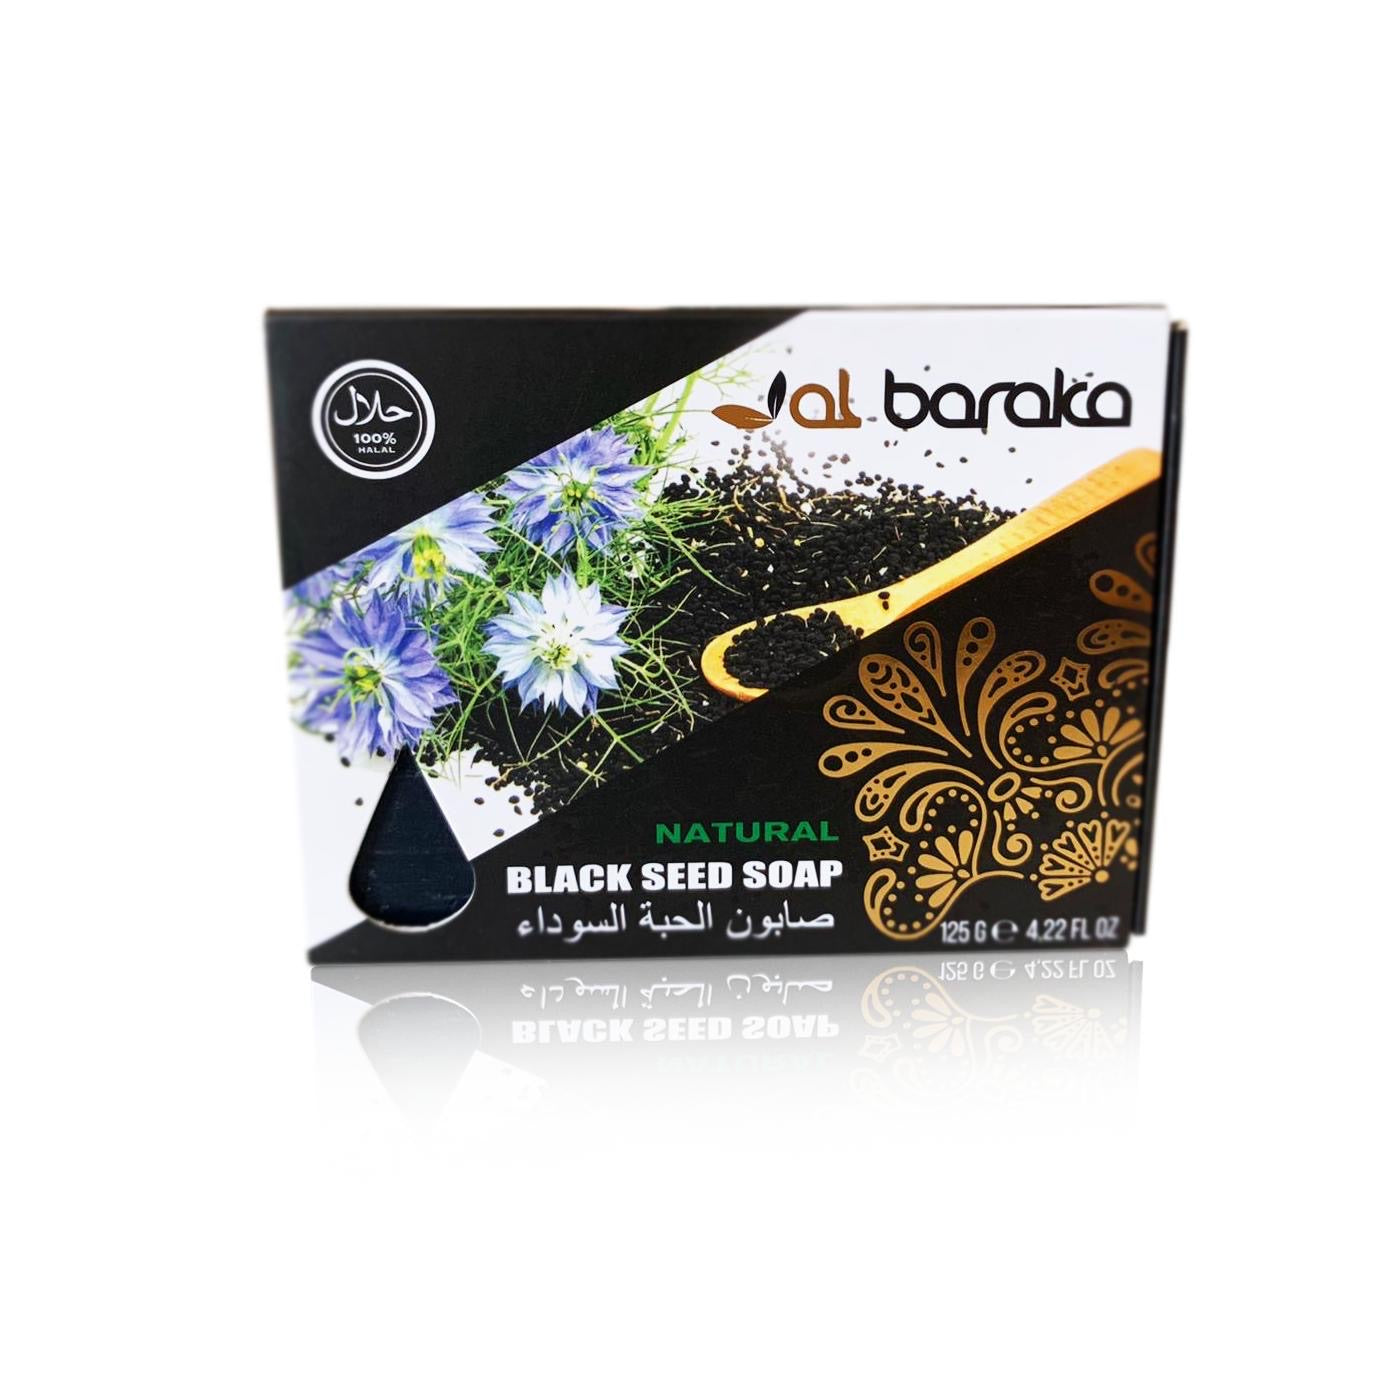 Al Baraka Black Seed Soap - jubbas.com